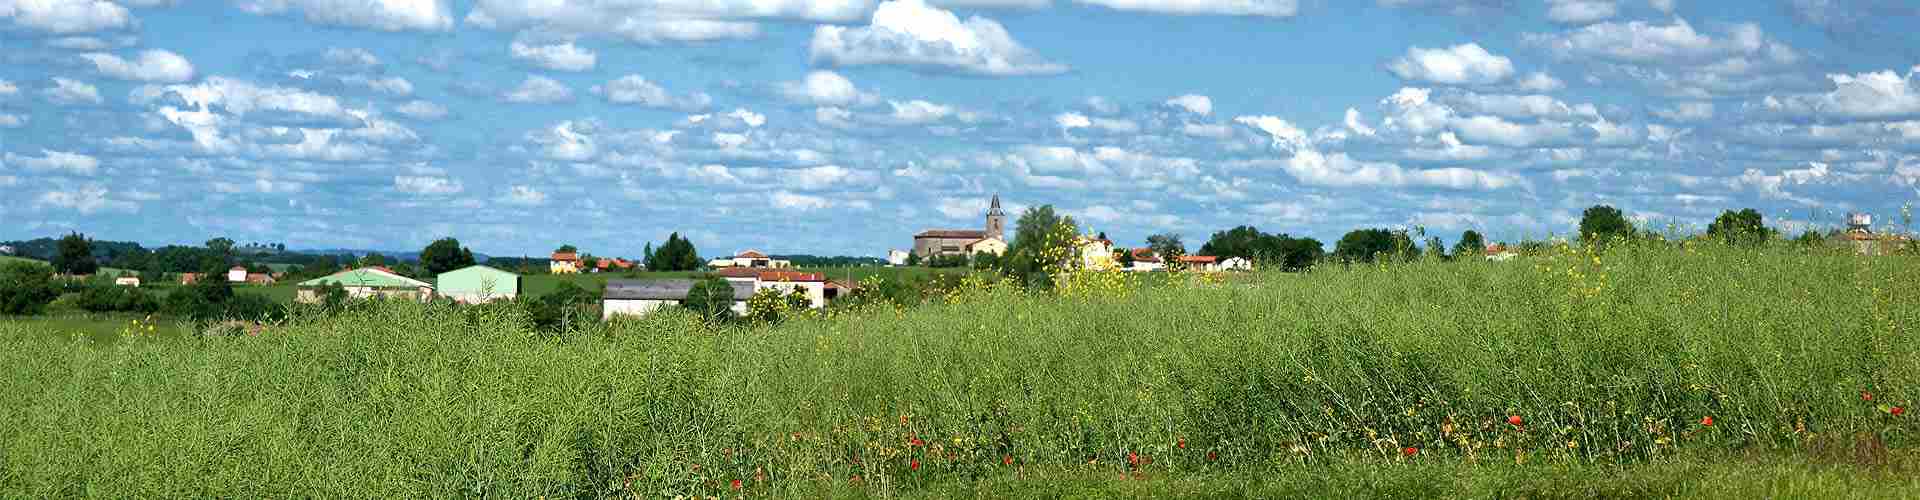 Casas rurales en Urdíroz